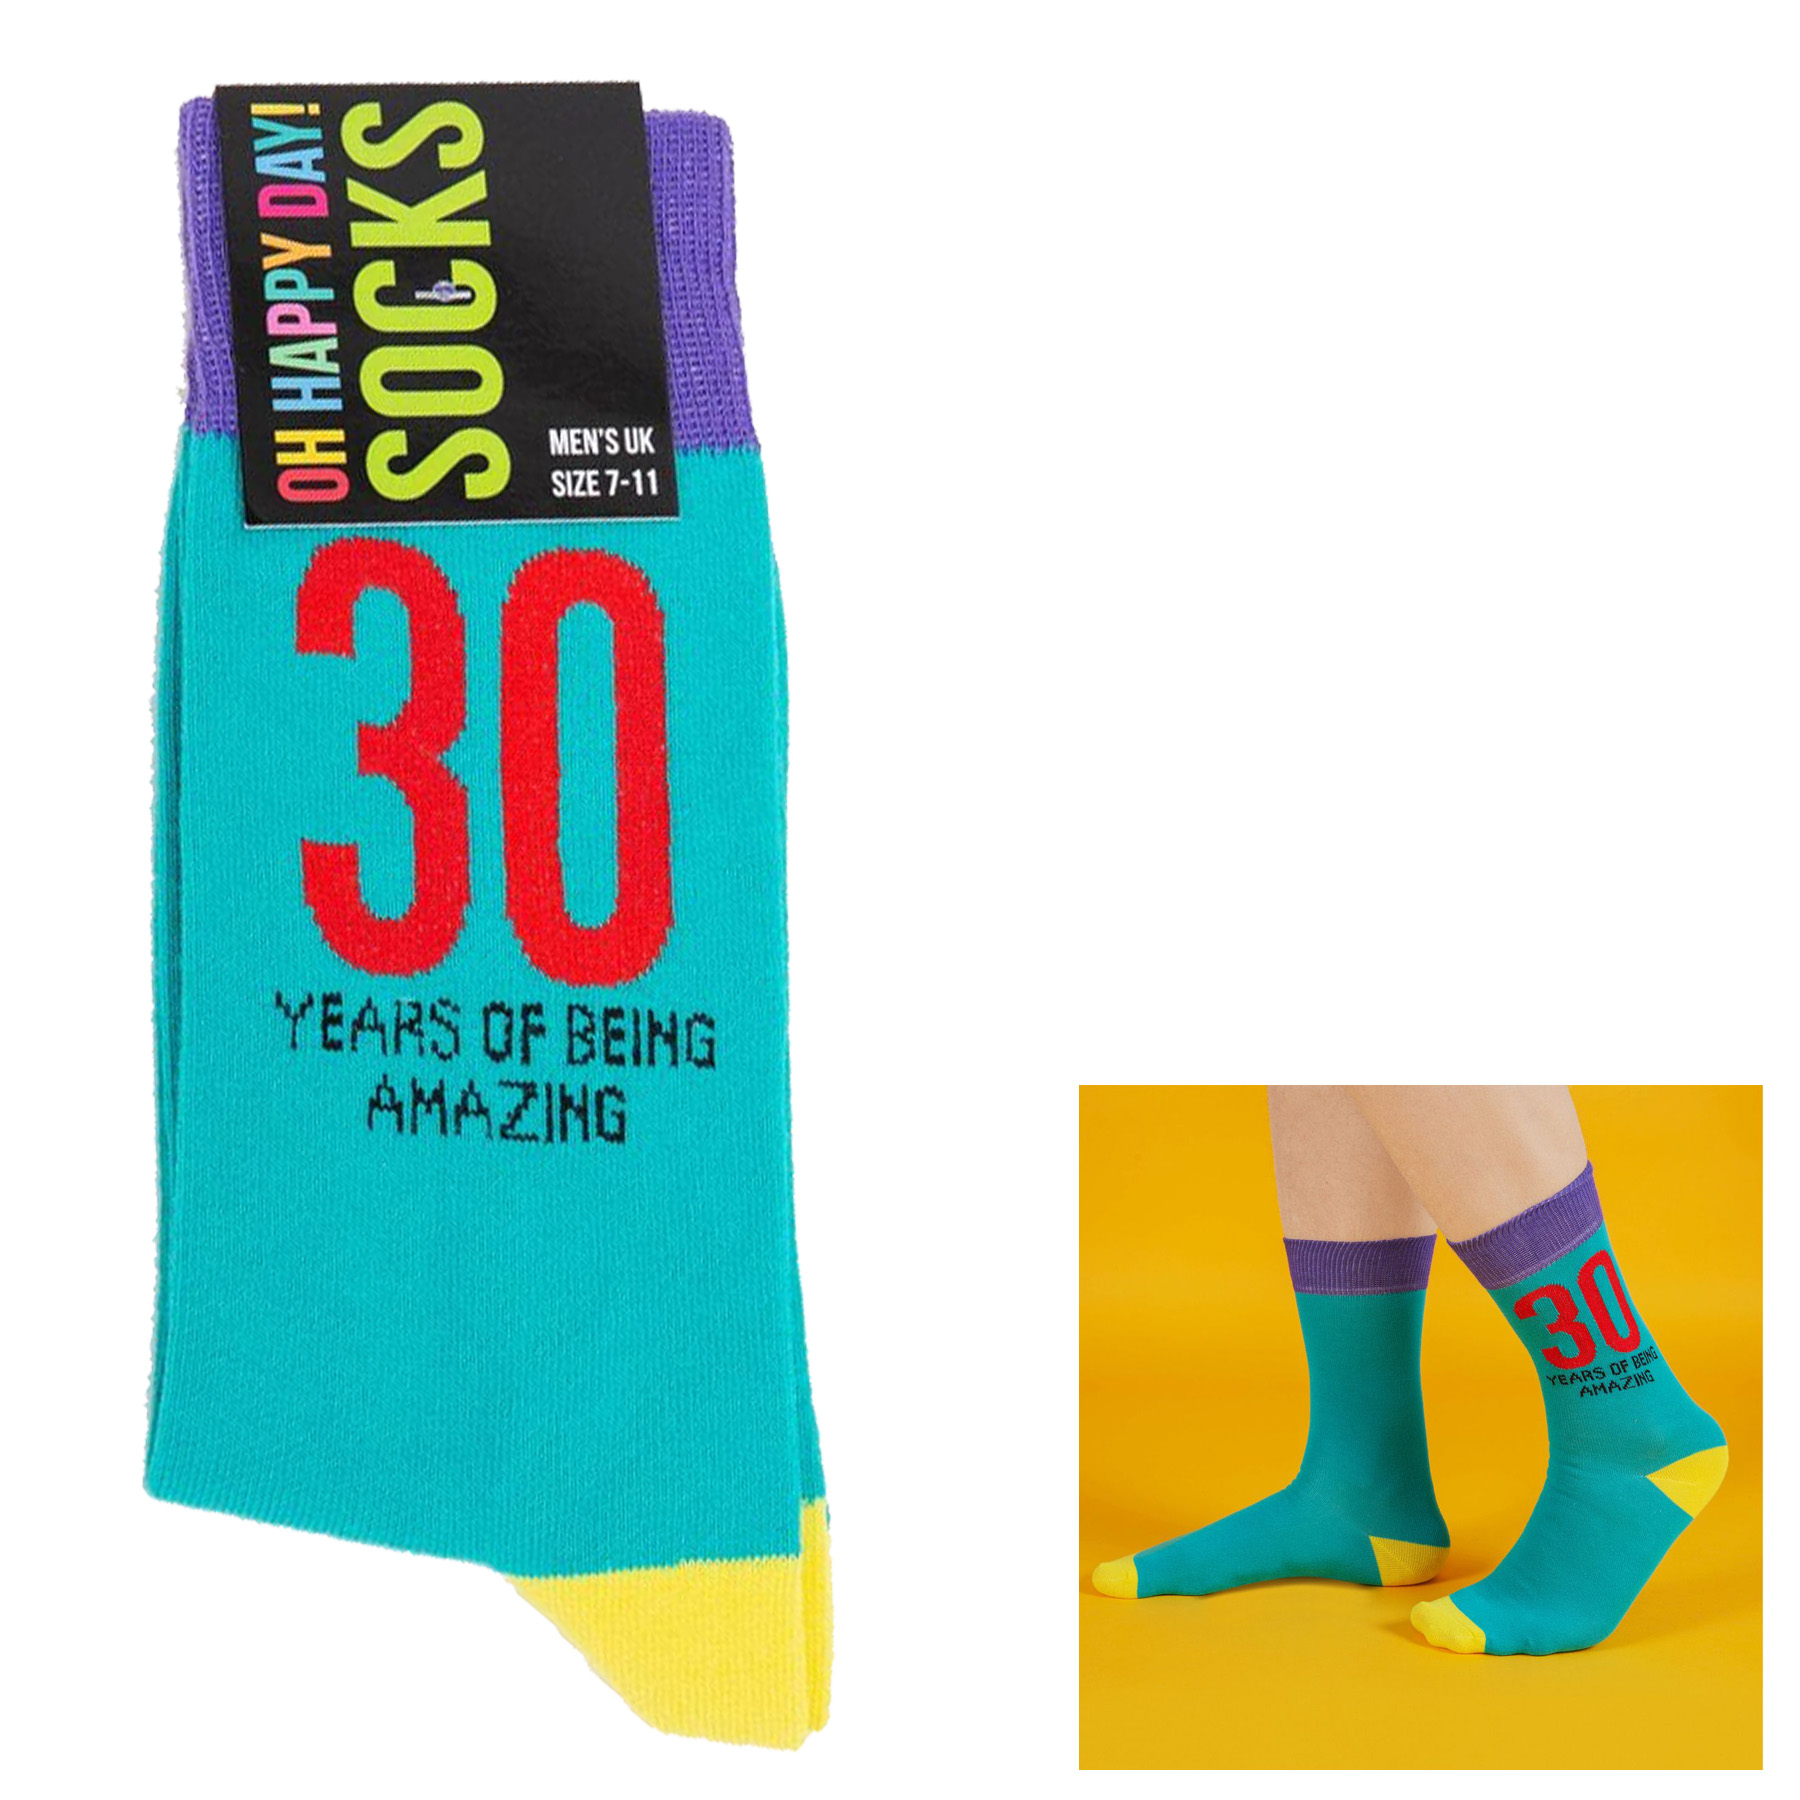 Men's Pair Colourful Socks Size 7-11 30th Birthday